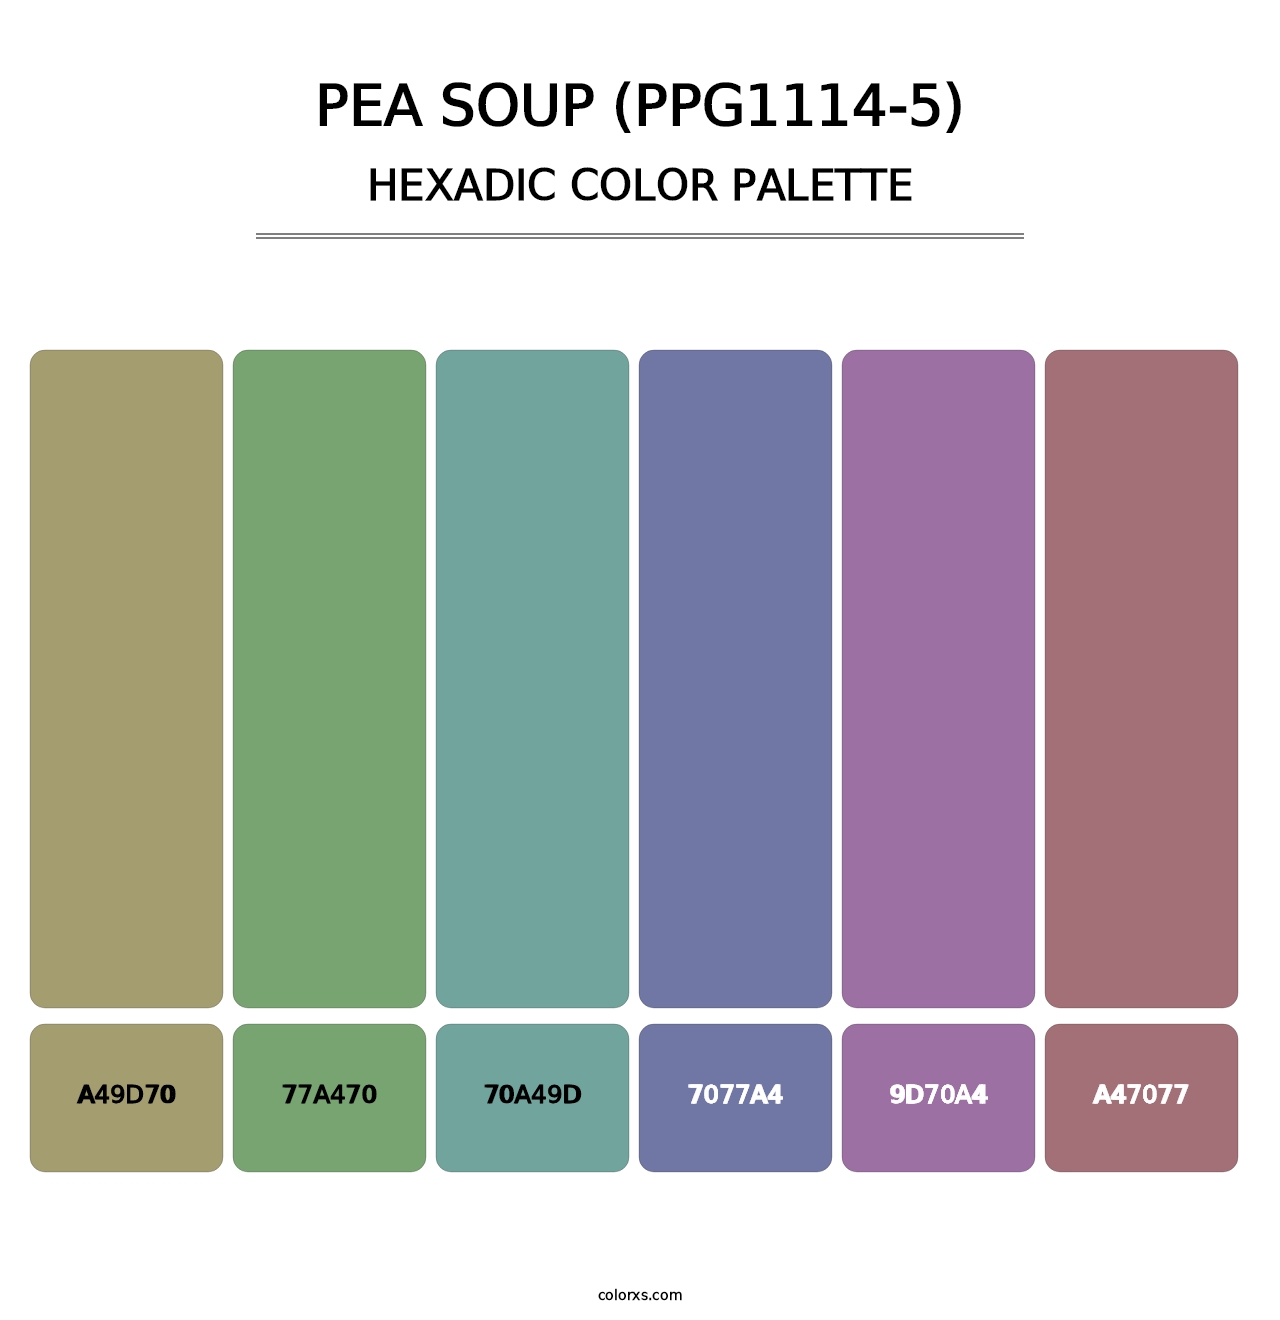 Pea Soup (PPG1114-5) - Hexadic Color Palette